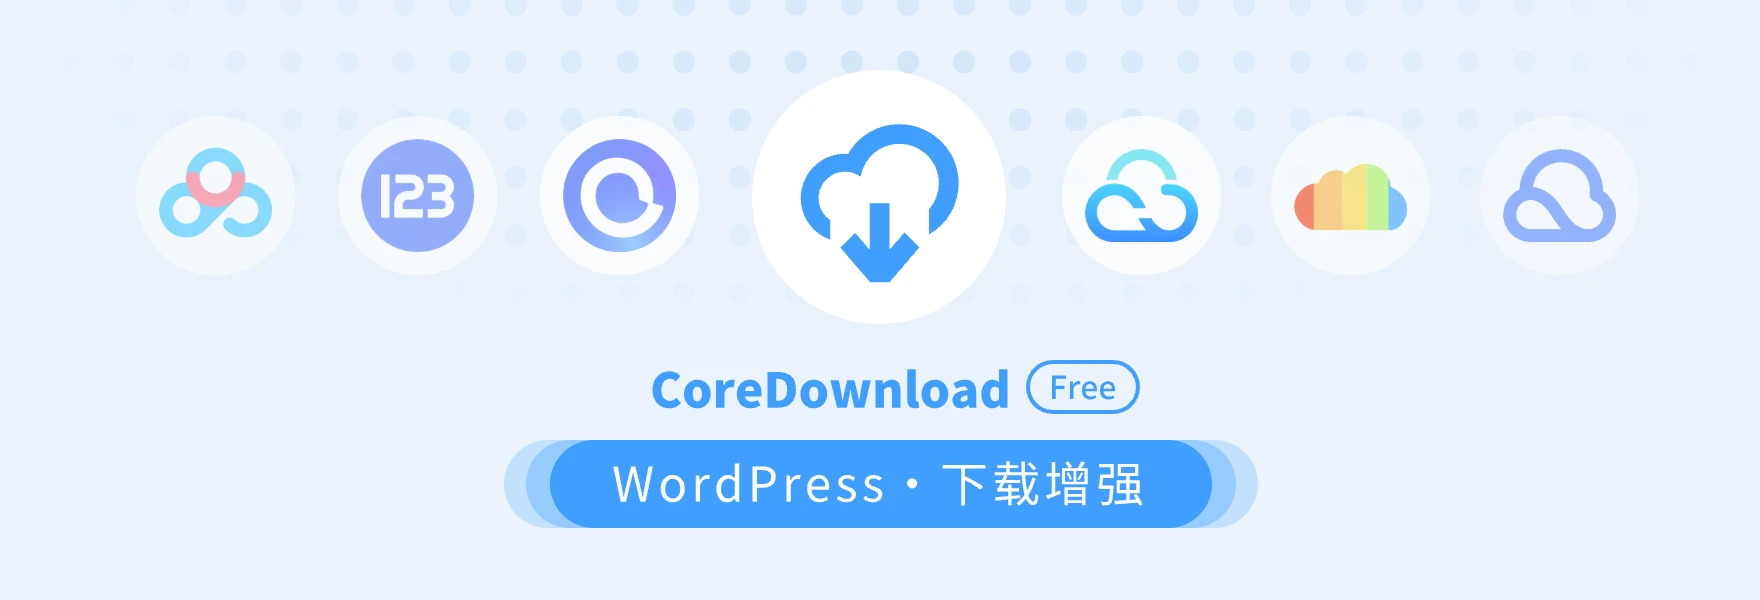 CoreDownload - WP下载增强插件.webp